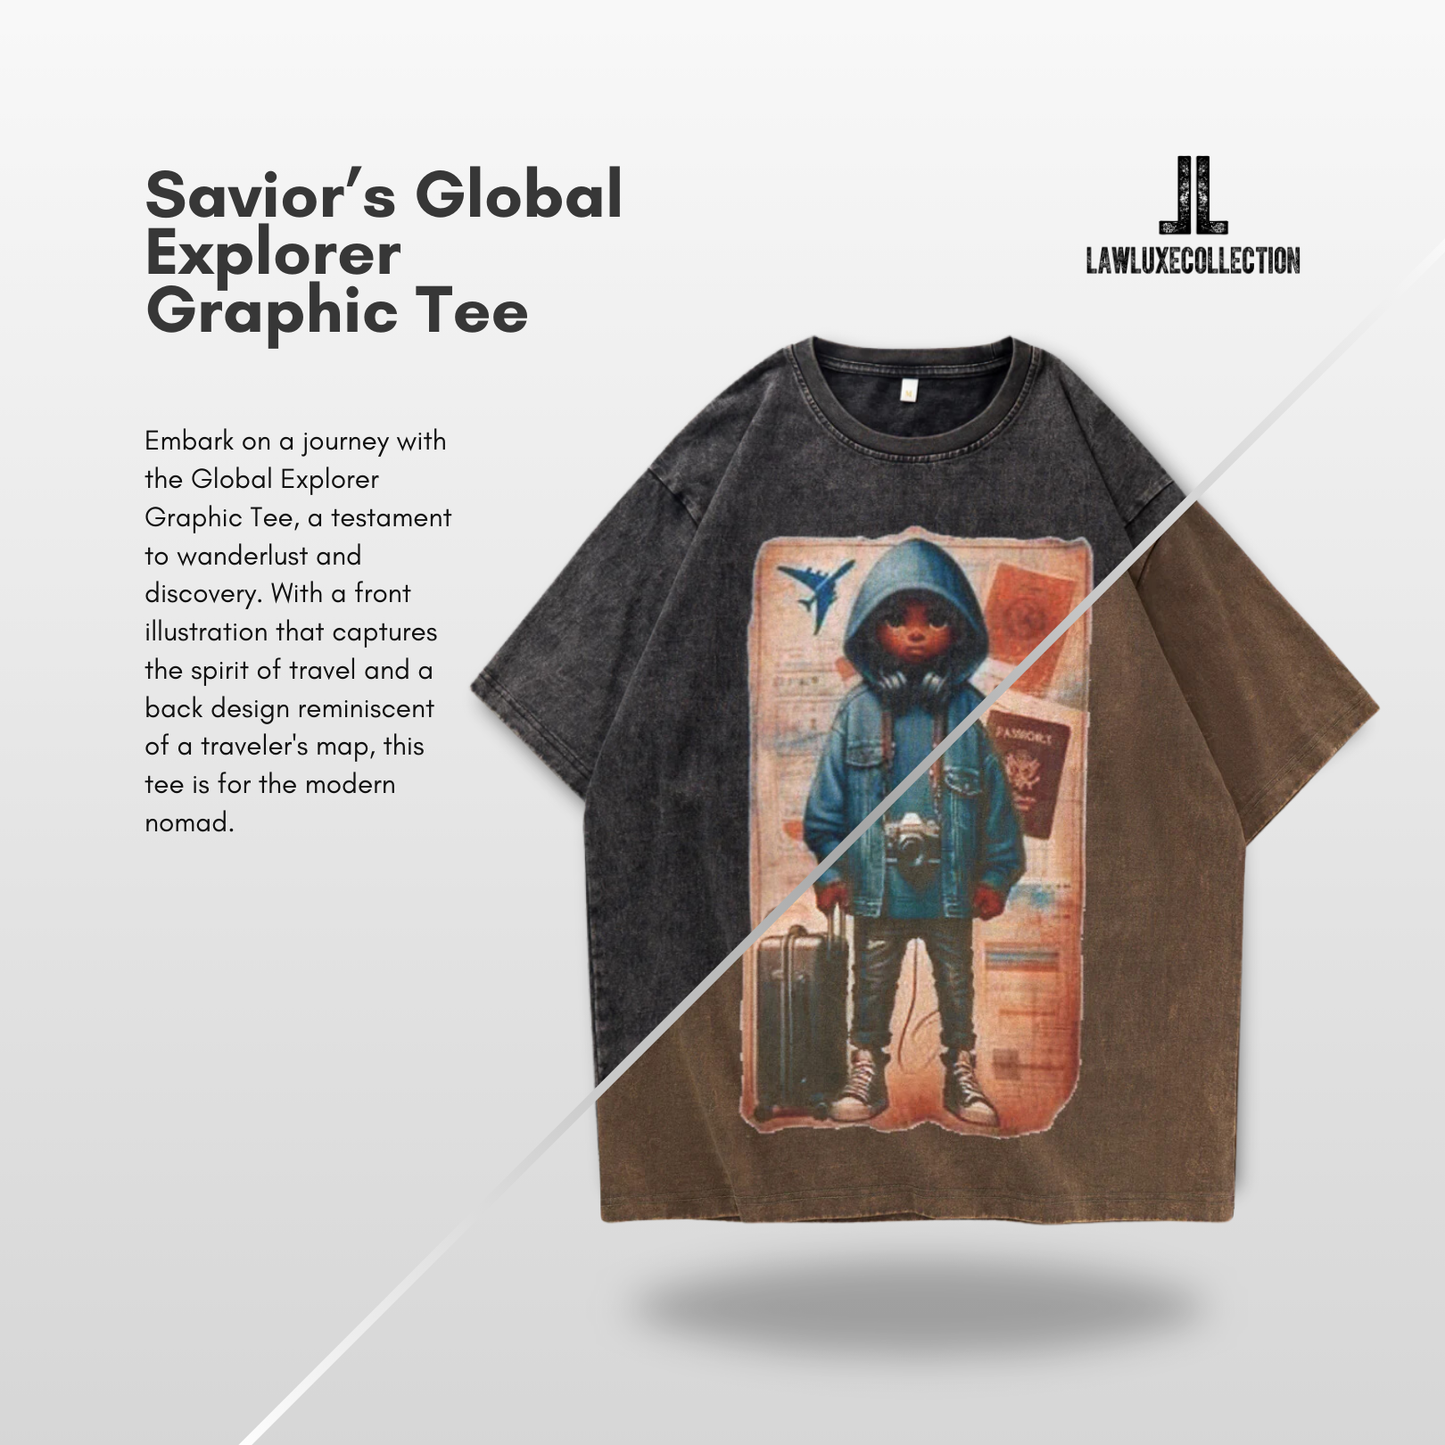 Savior’s Global Explorer Graphic Tee